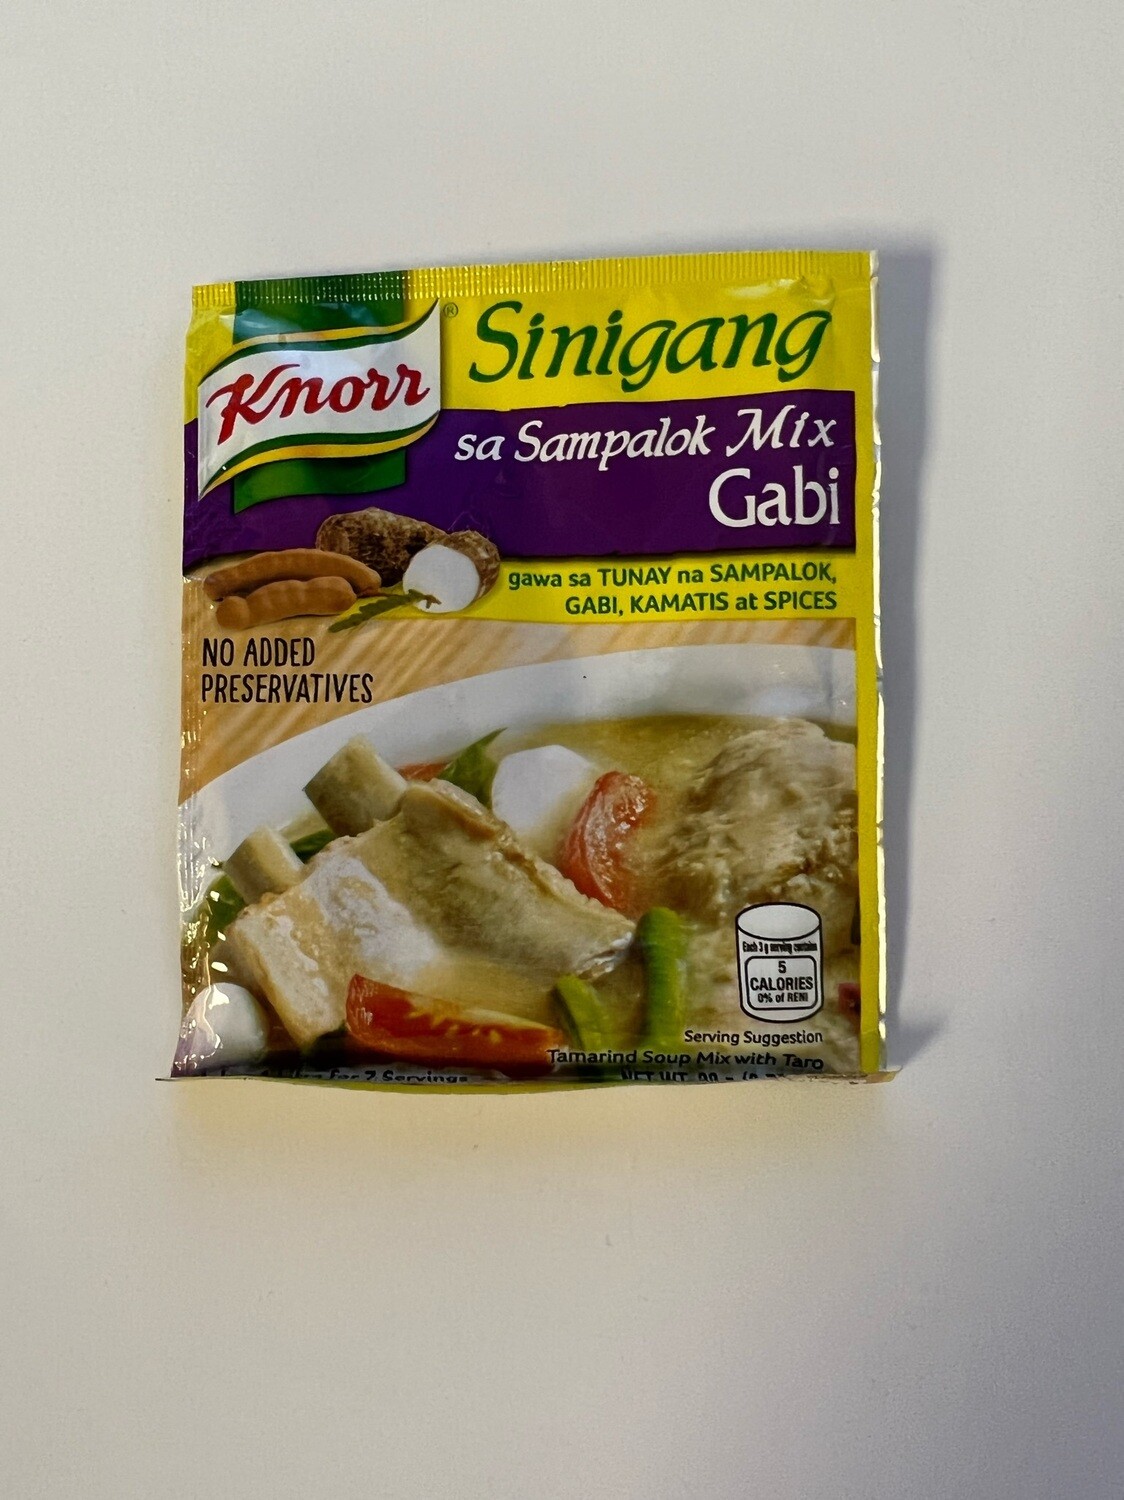 Knorr sinigang sa sampalok with gabi